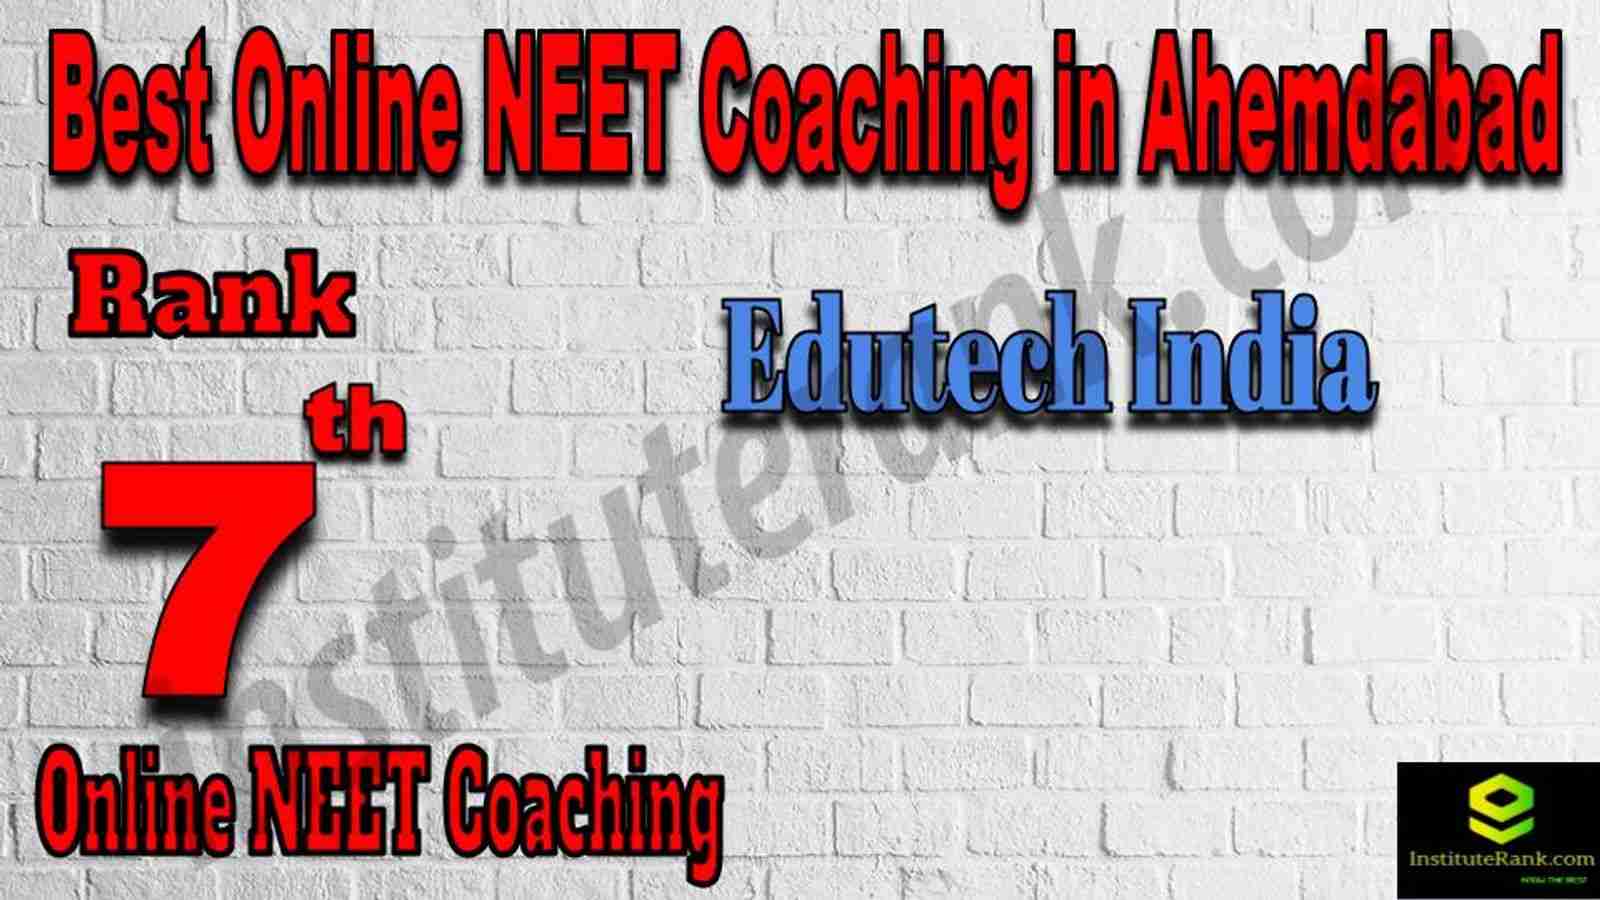 Rank 7 Best Online NEET Coaching in Ahmedabad